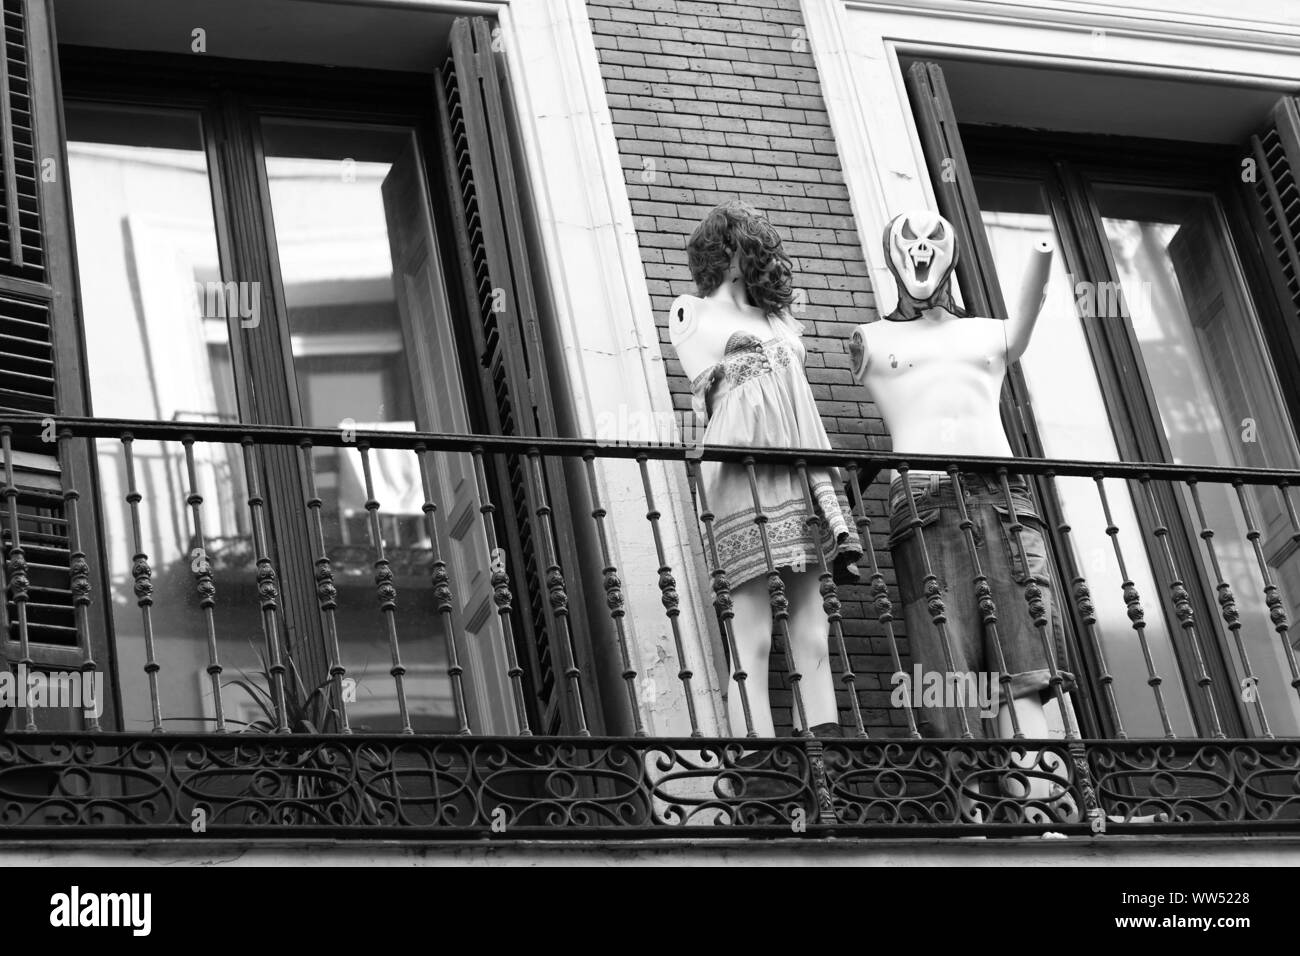 Strange figures on a balcony, Stock Photo